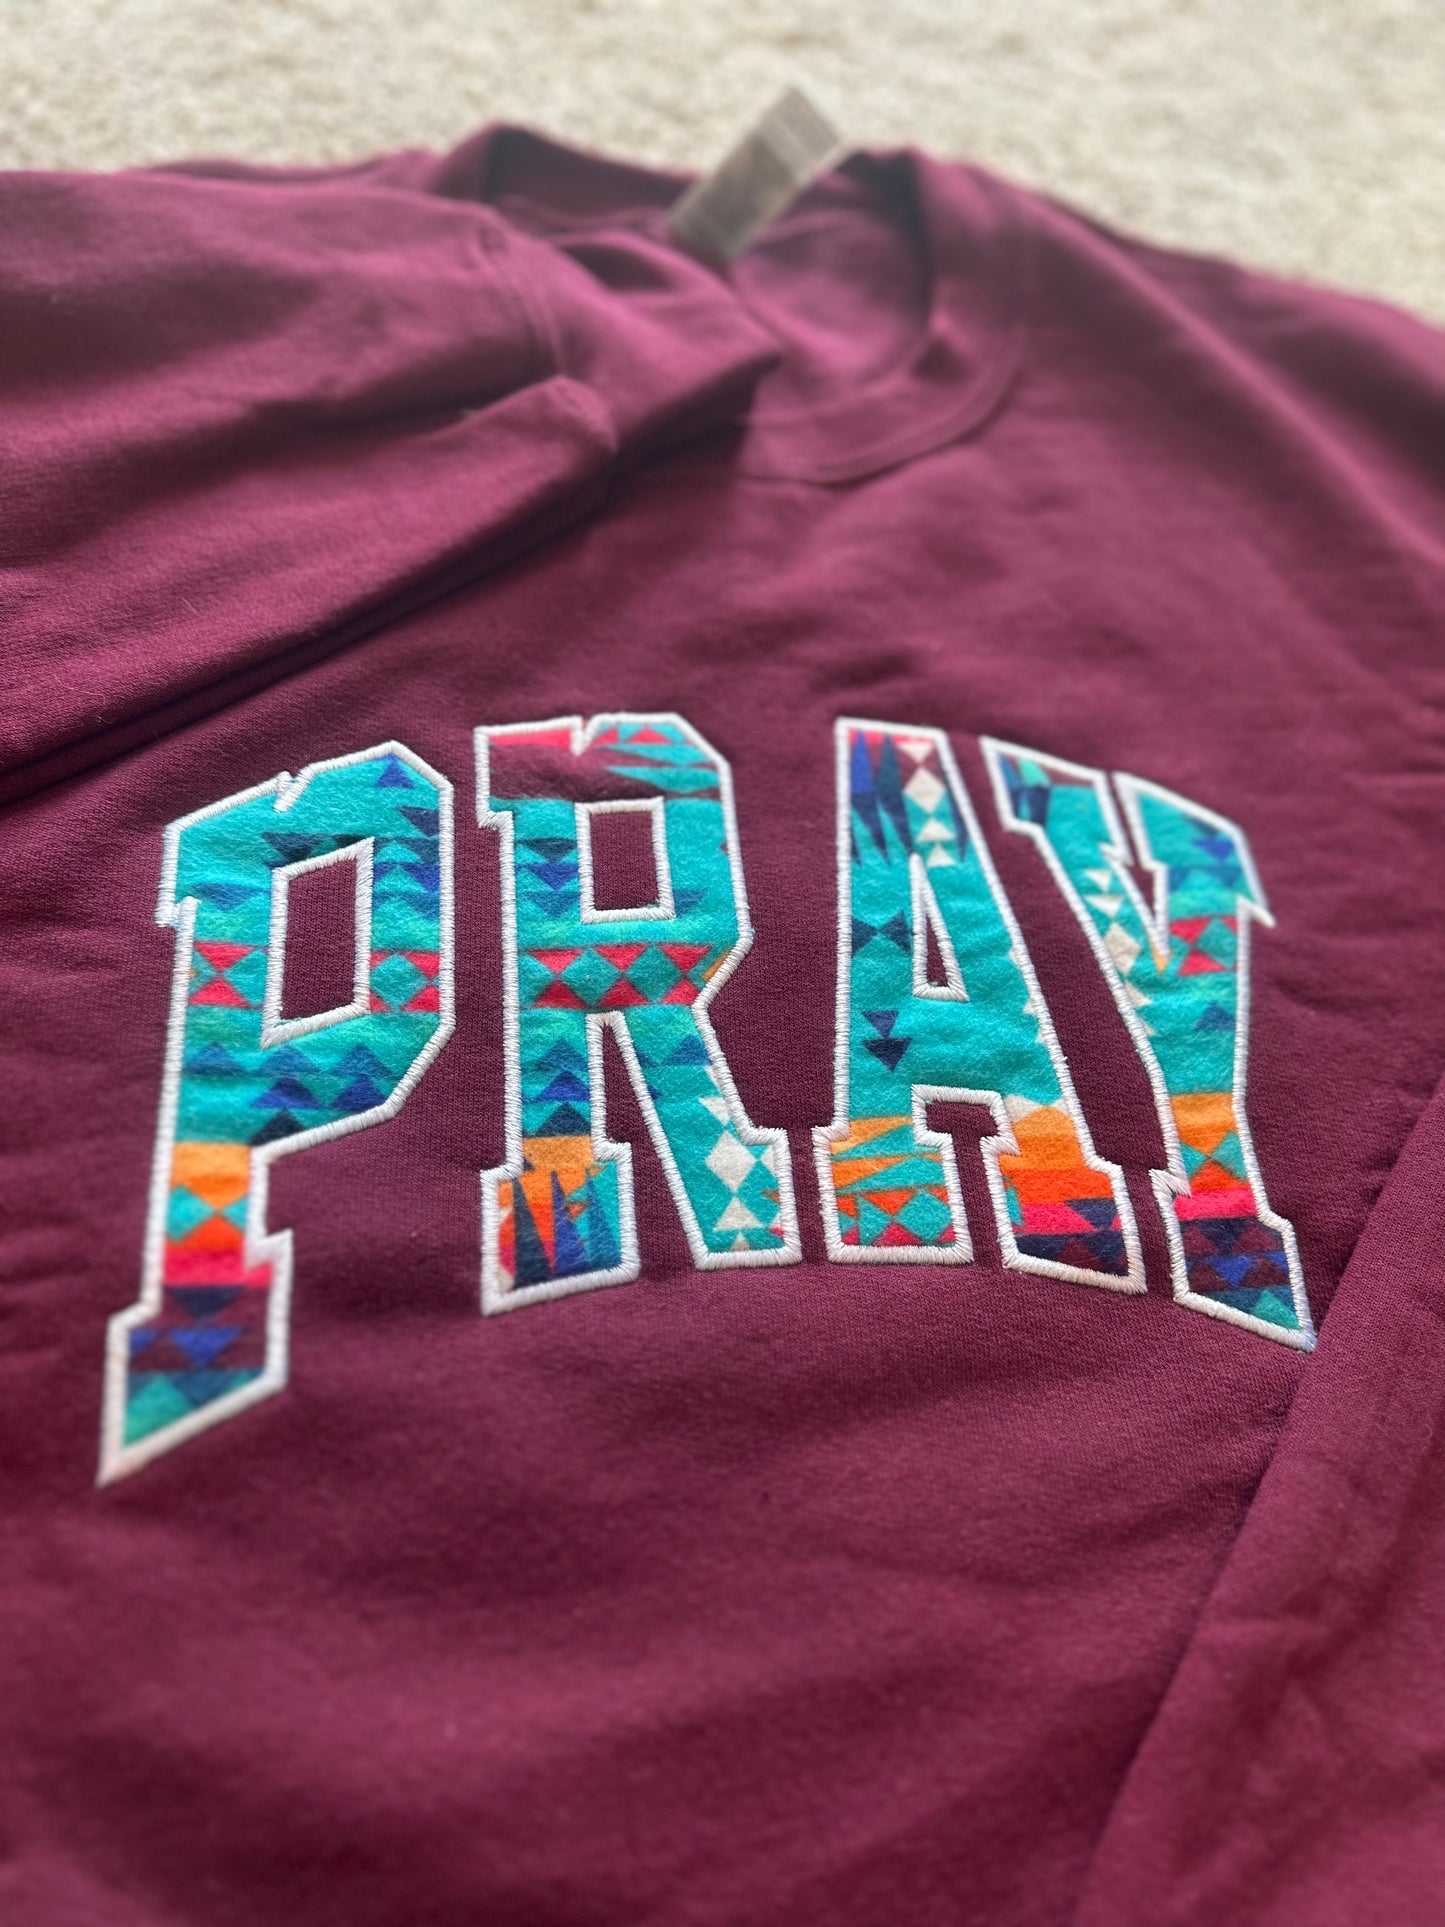 Pray Embroidered Sweatshirt